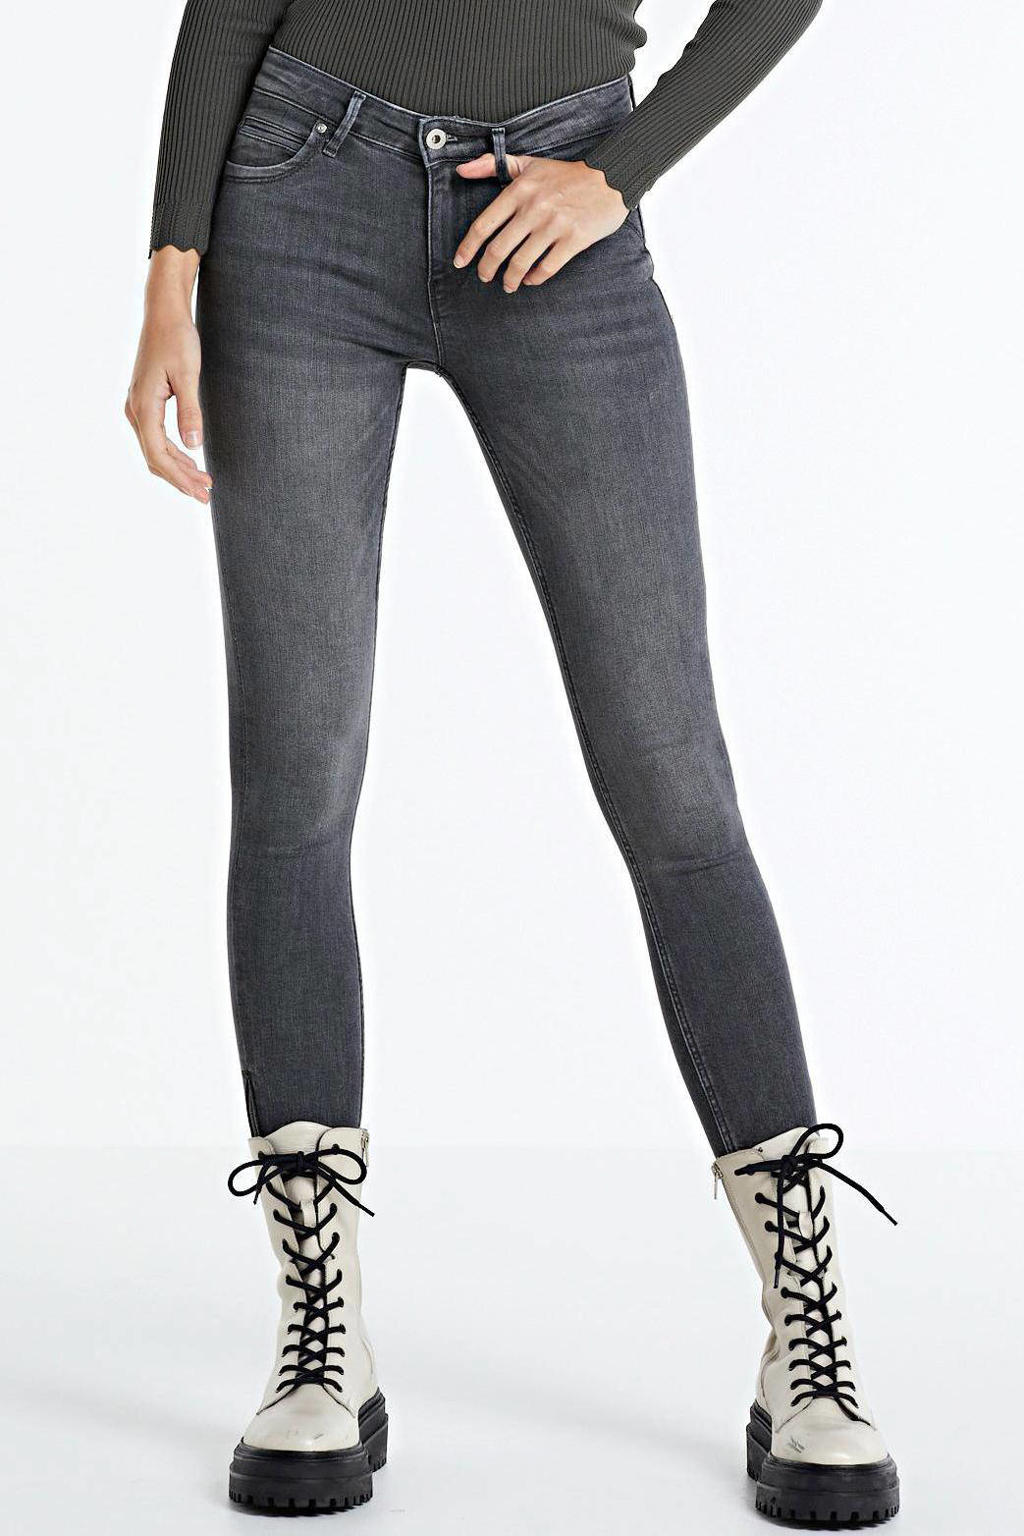 ONLY cropped skinny jeans ONLKENDELL medium grey denim